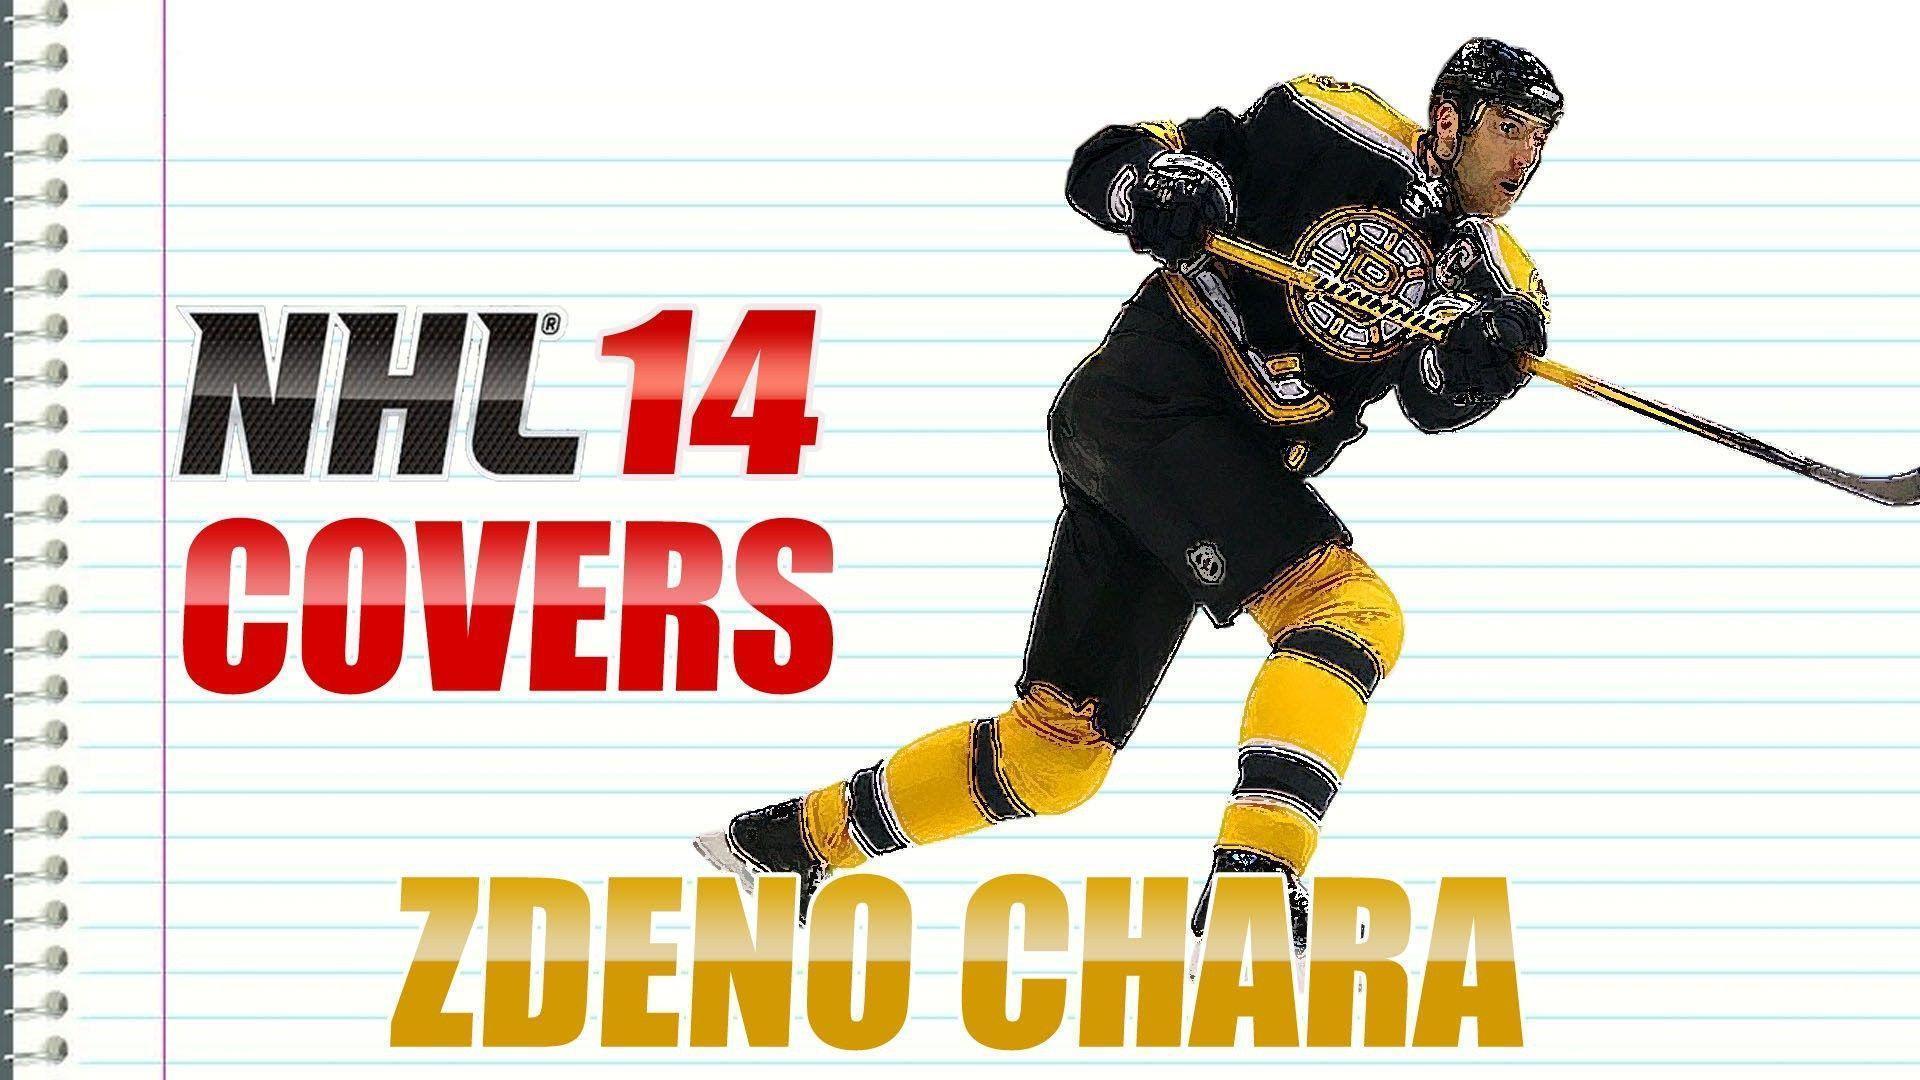 Hockey player Boston Zdeno Chara wallpaper and image